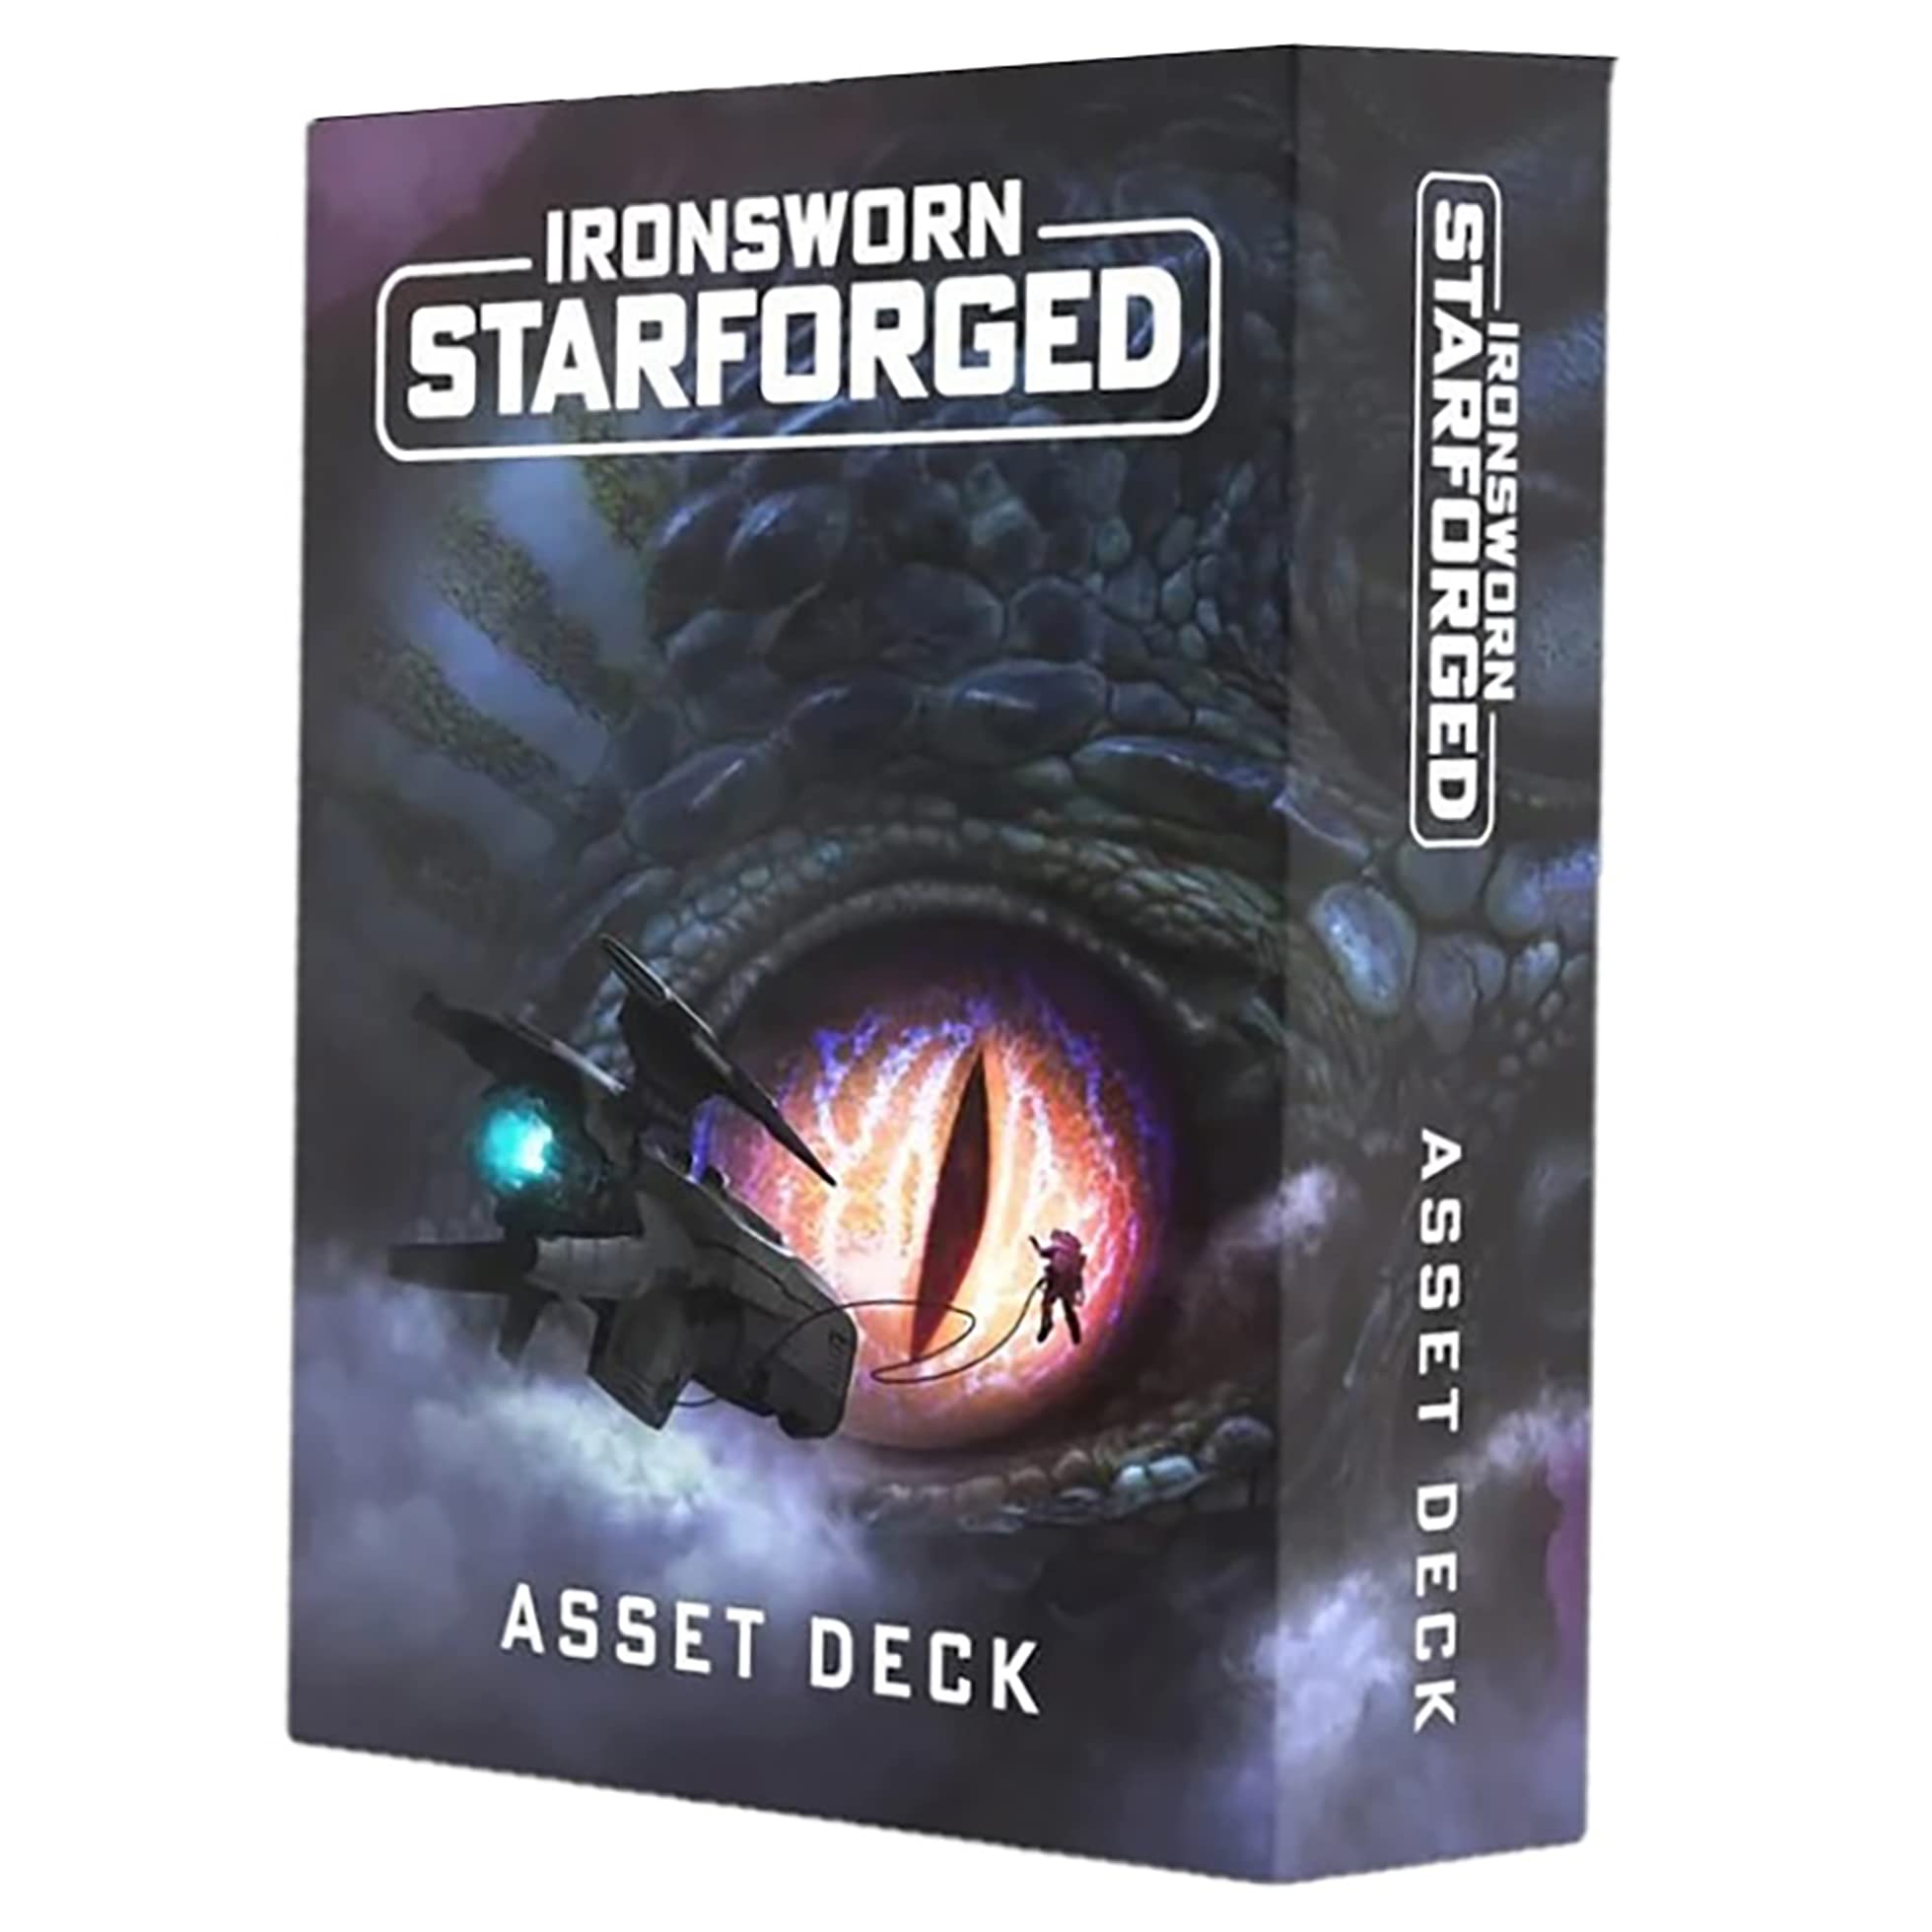 Ironsworn: Starforged - Asset Deck (requires image)